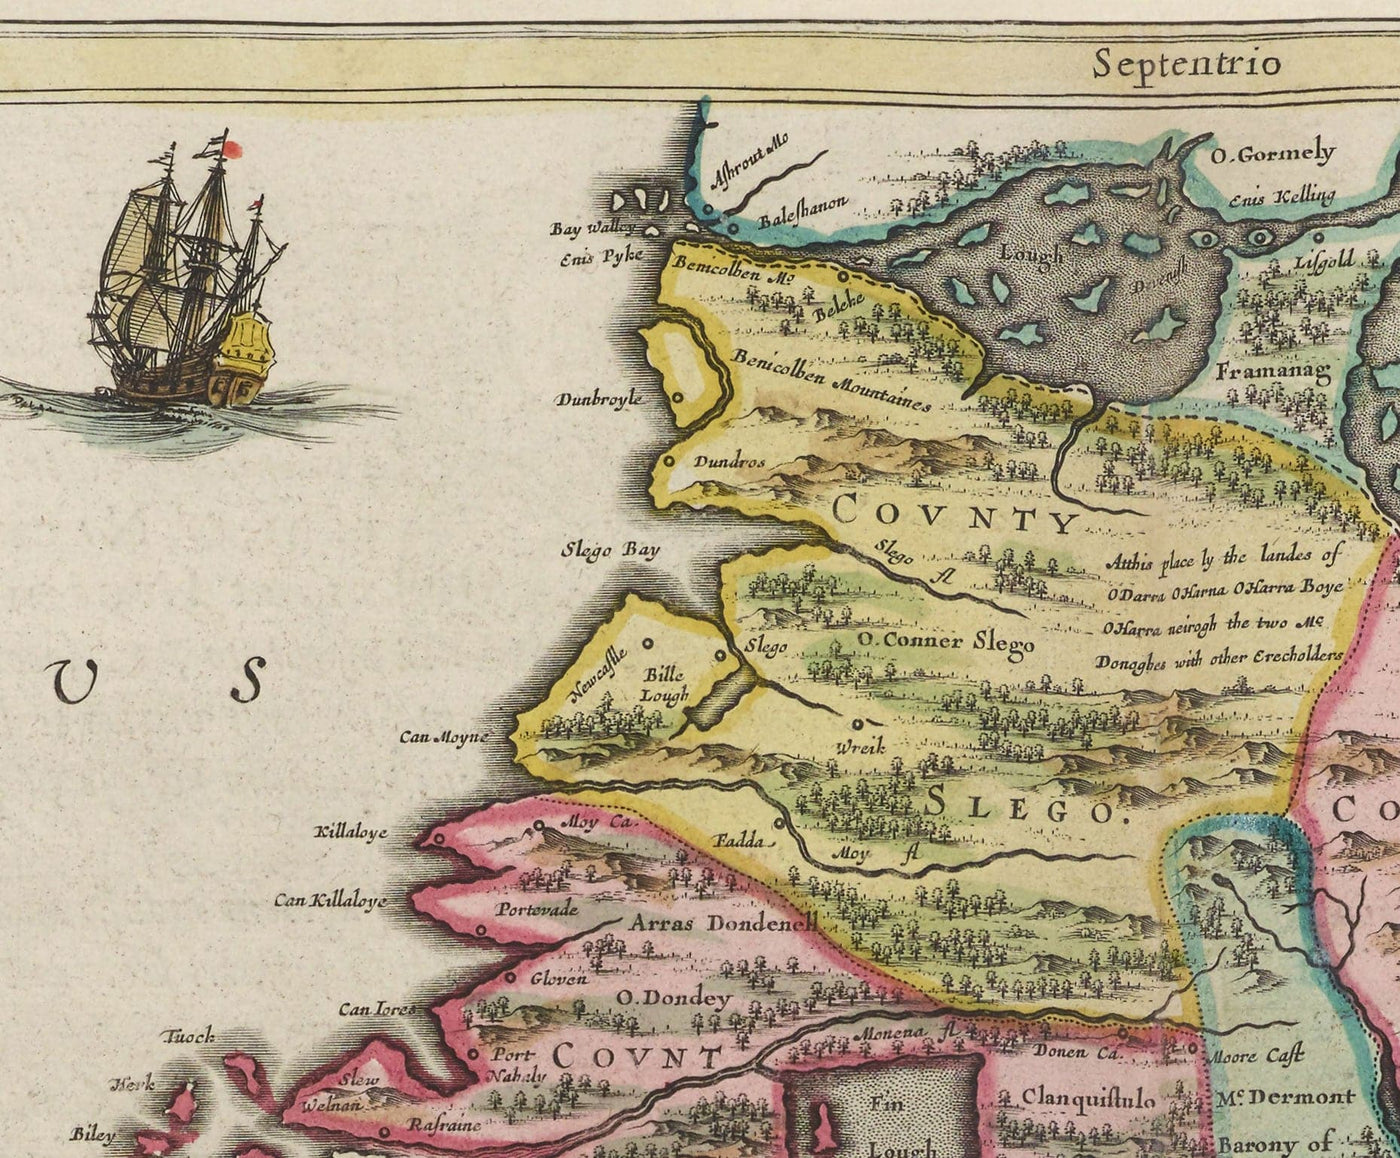 Old Map of Connacht, Ireland in 1665 by Joan Blaeu - Connaught, Galway, Sligo, Mayo, Leitrim, Clare, West Eire